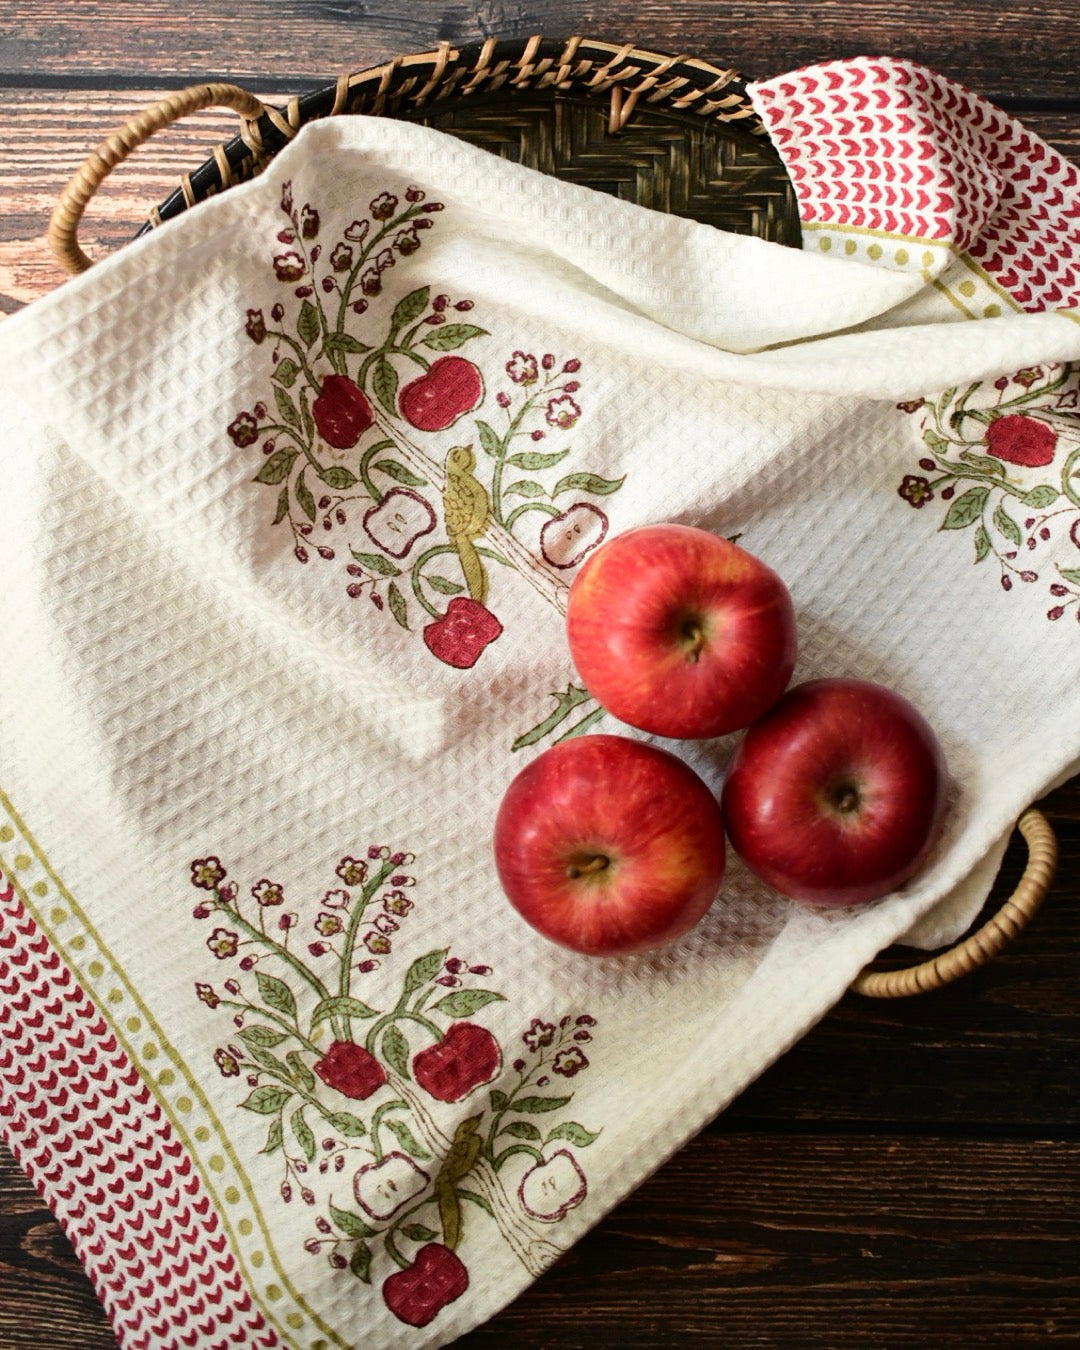 Apple orchard tea towel with apples on it